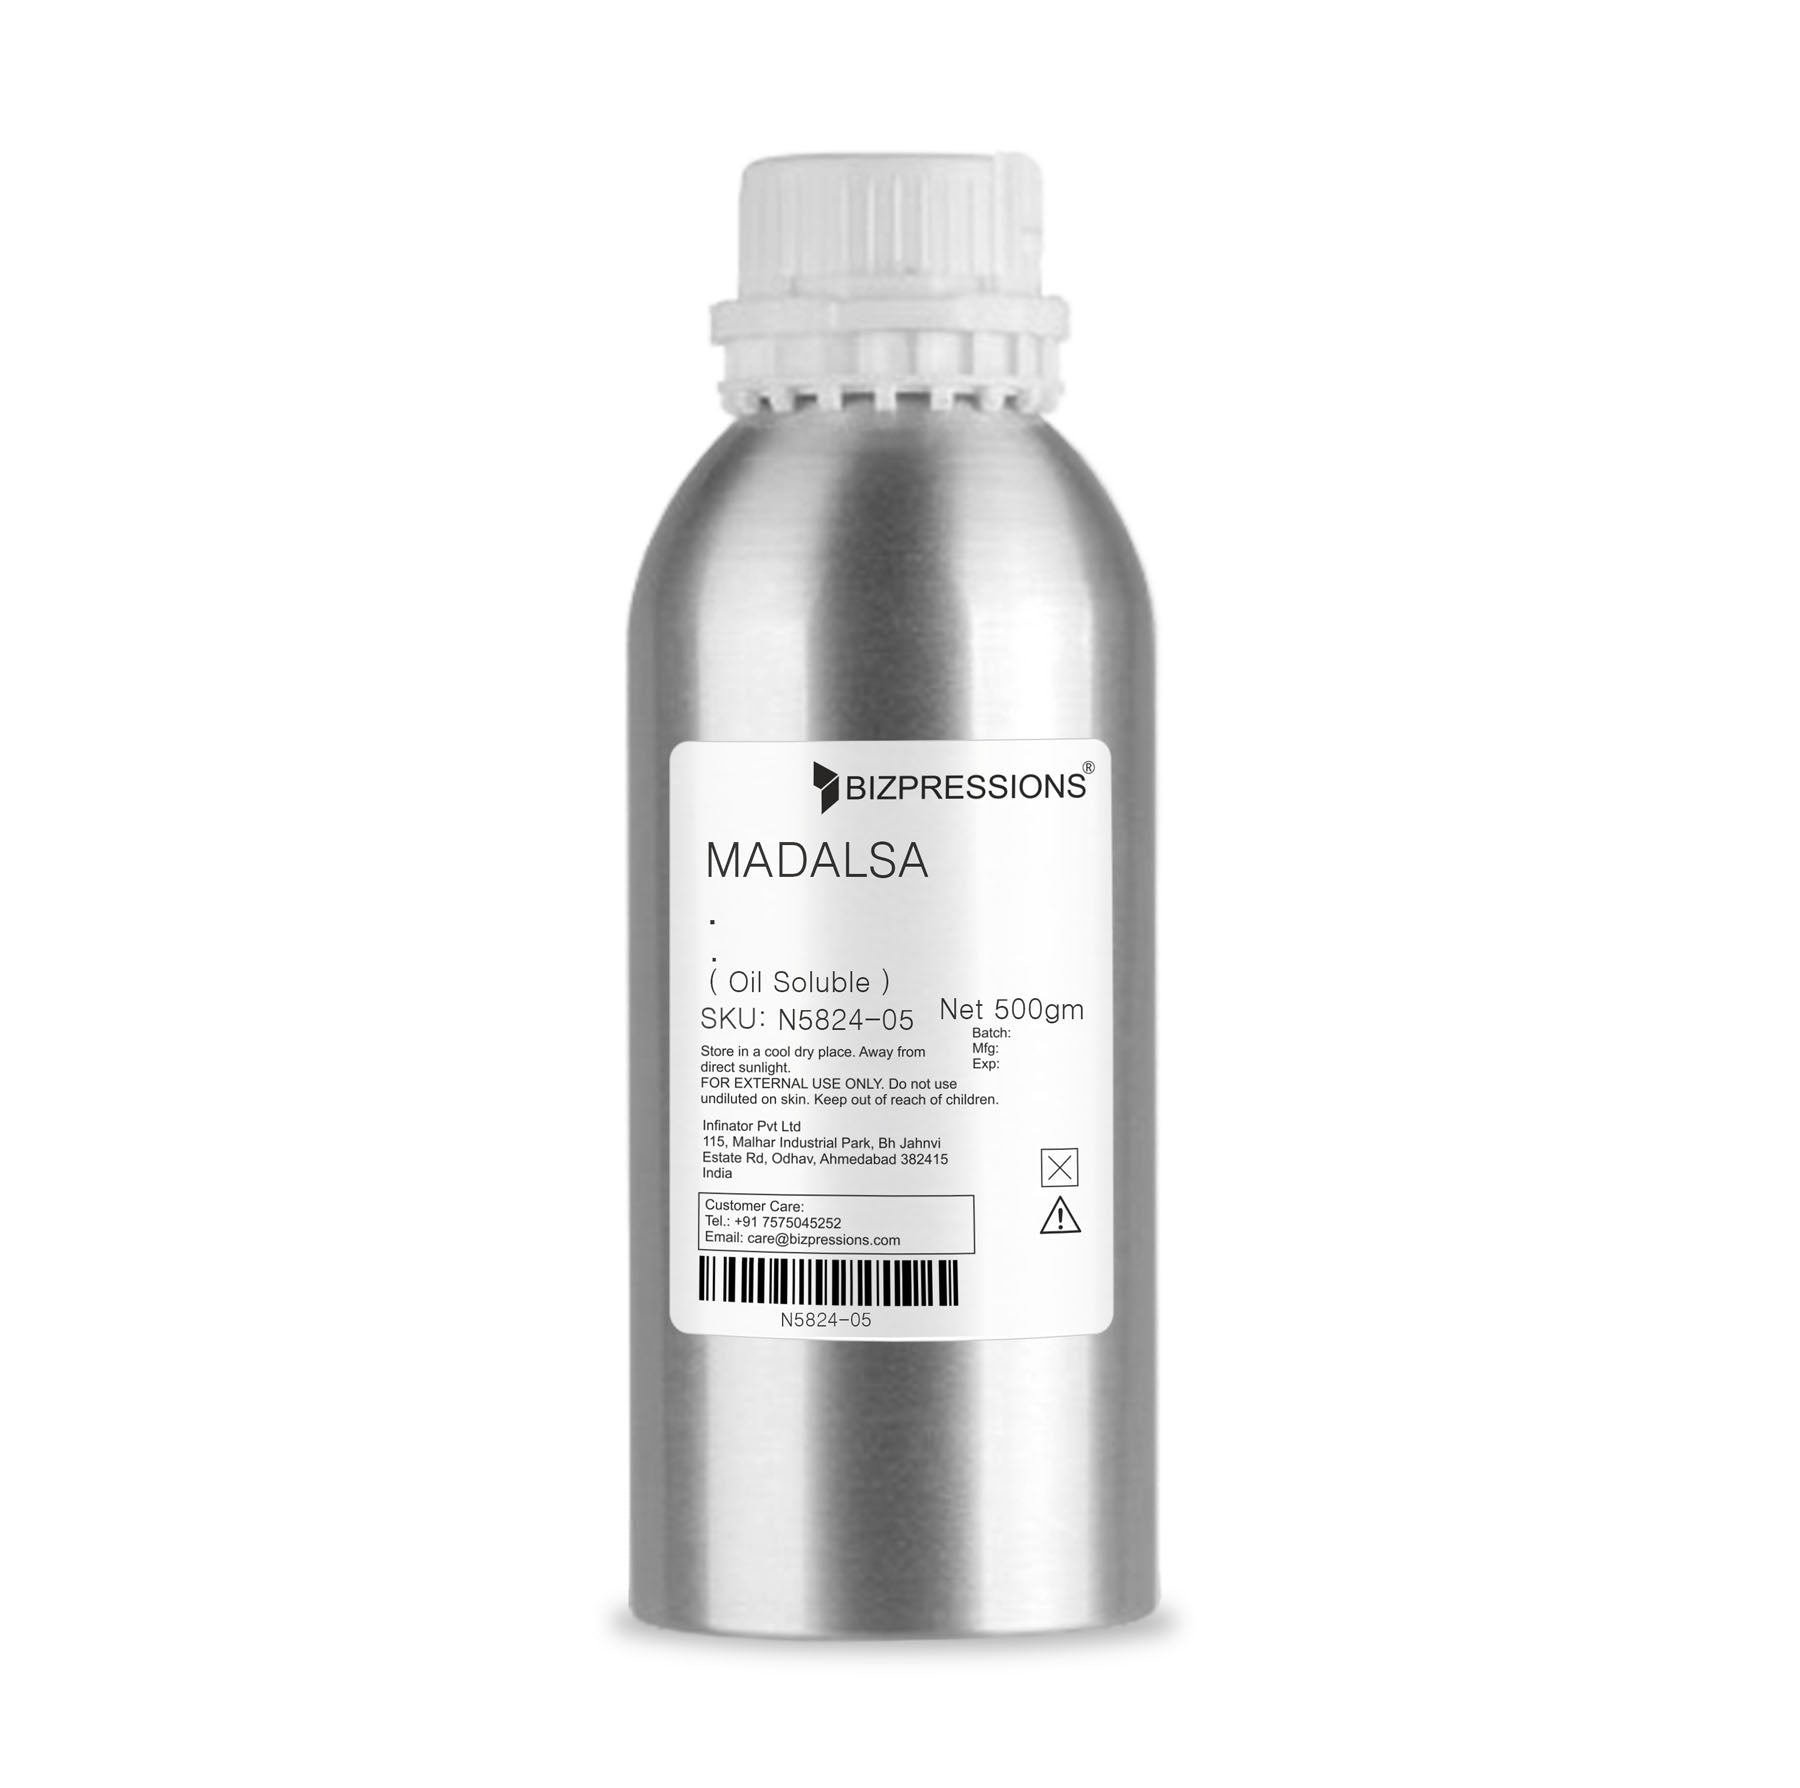 MADALSA - Fragrance ( Oil Soluble ) - 500 gm